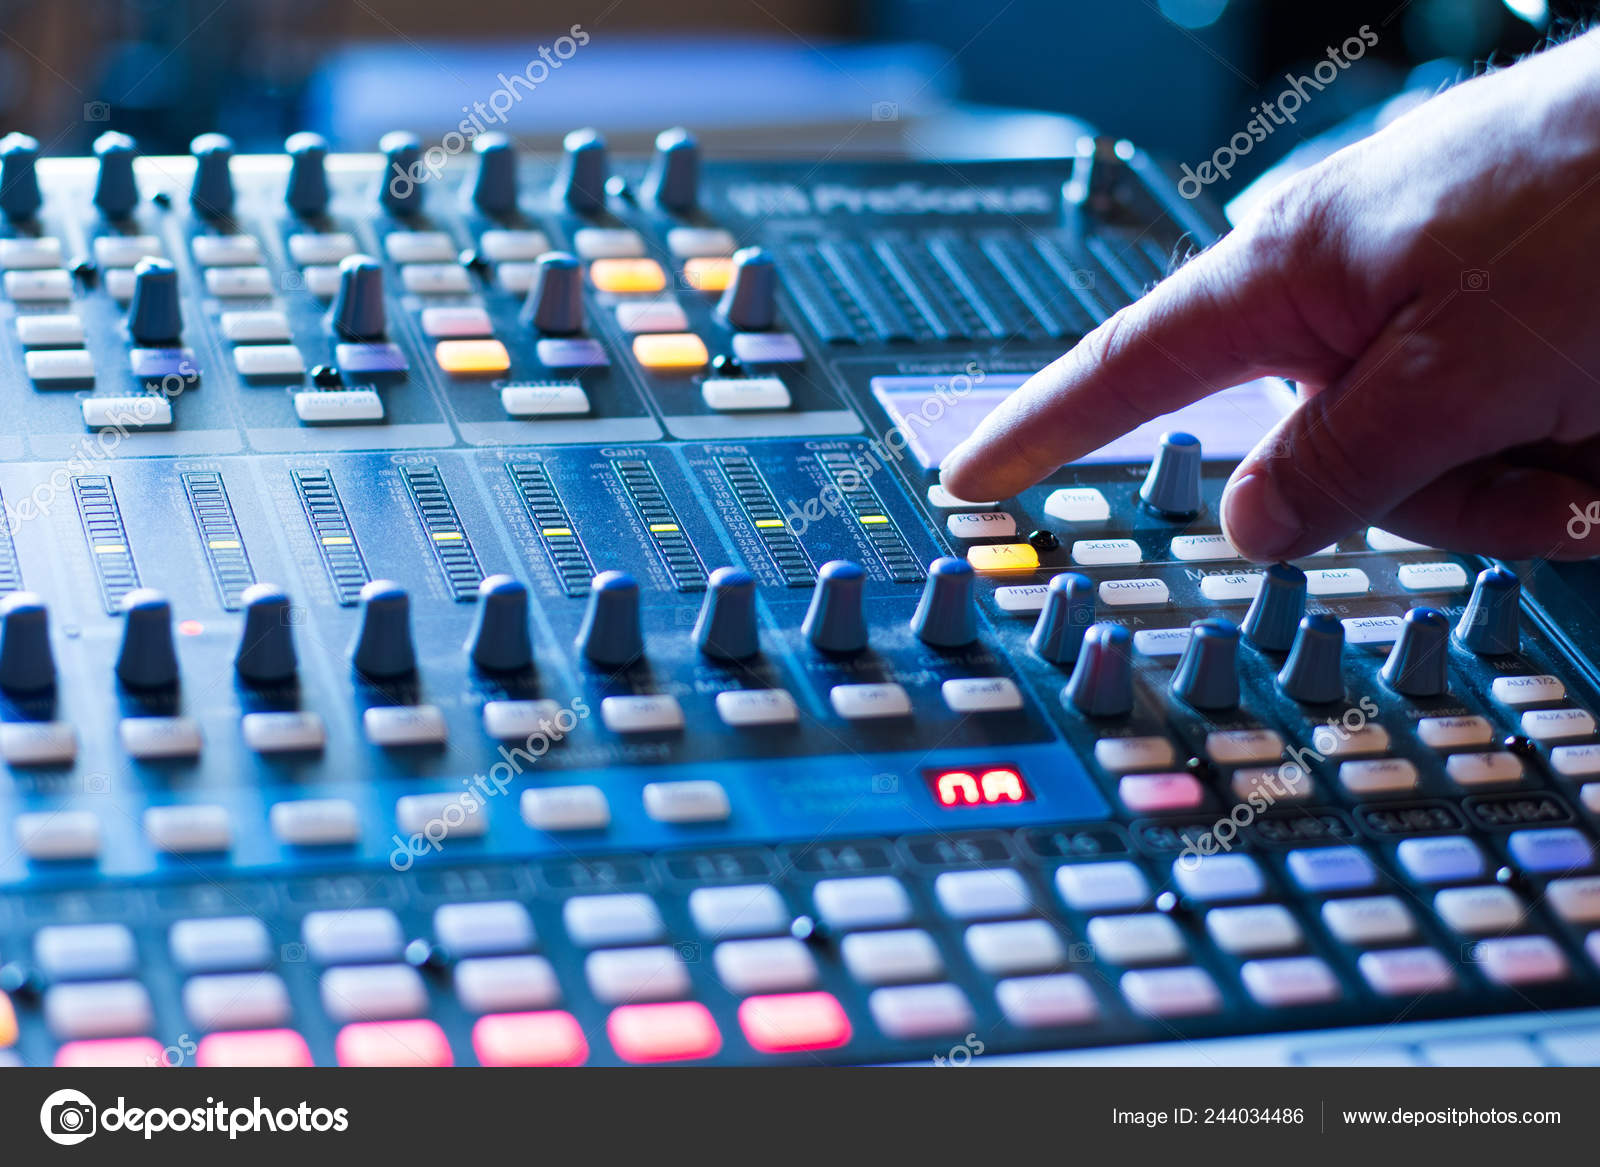 Professional Music Production Sound Recording Studio Mixer Desk